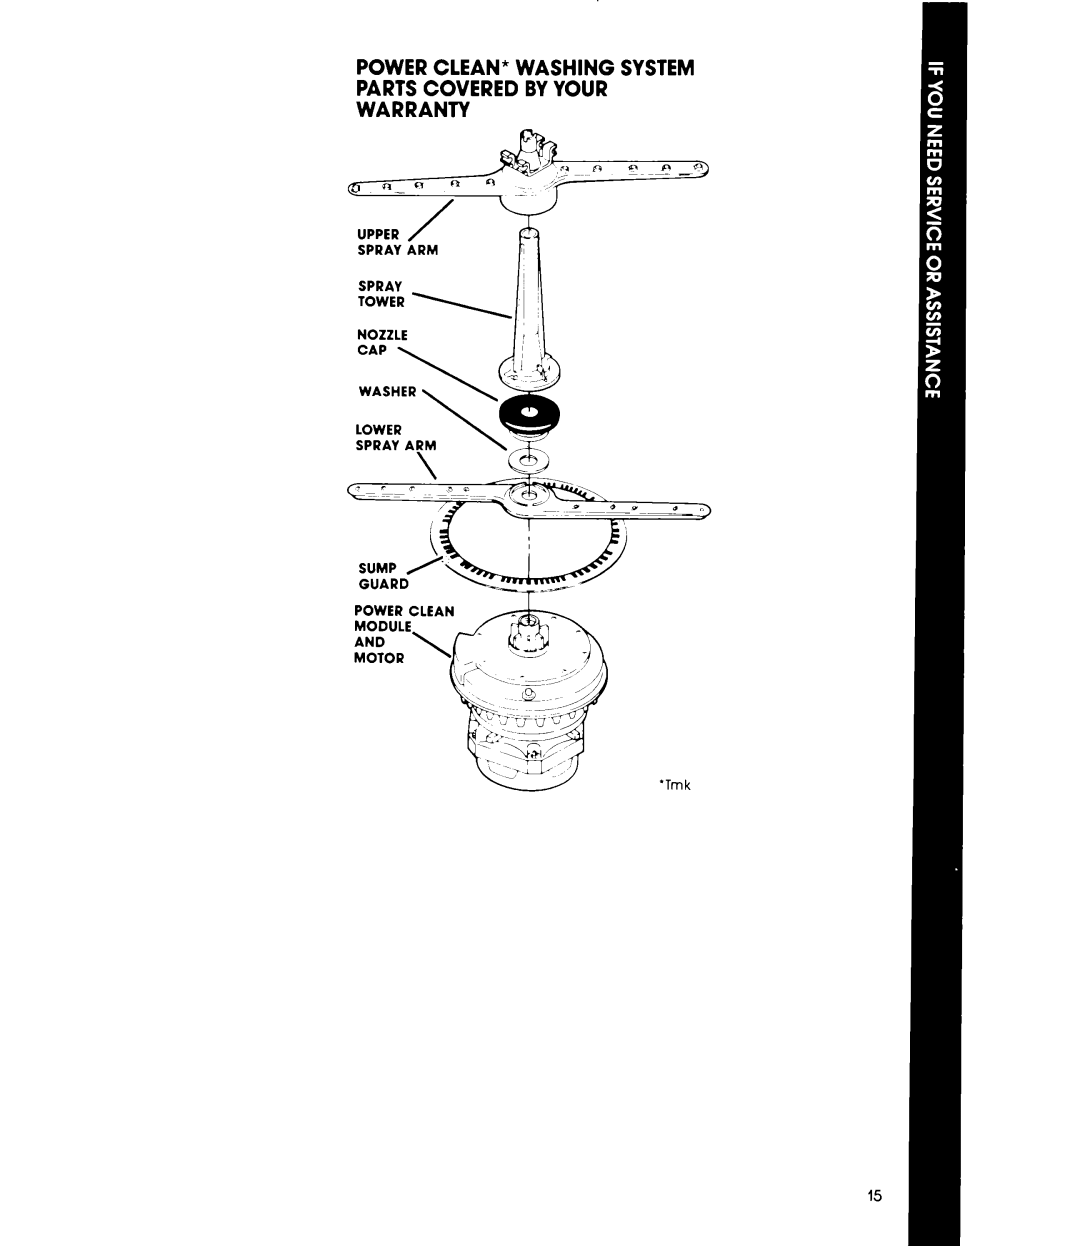 Whirlpool DU8900XT manual CAP \ WASHER \ \I LOWER SPRAY ARM \ = Ip, POWER CLEAN MODULE AND MOTOR ‘Tmk 